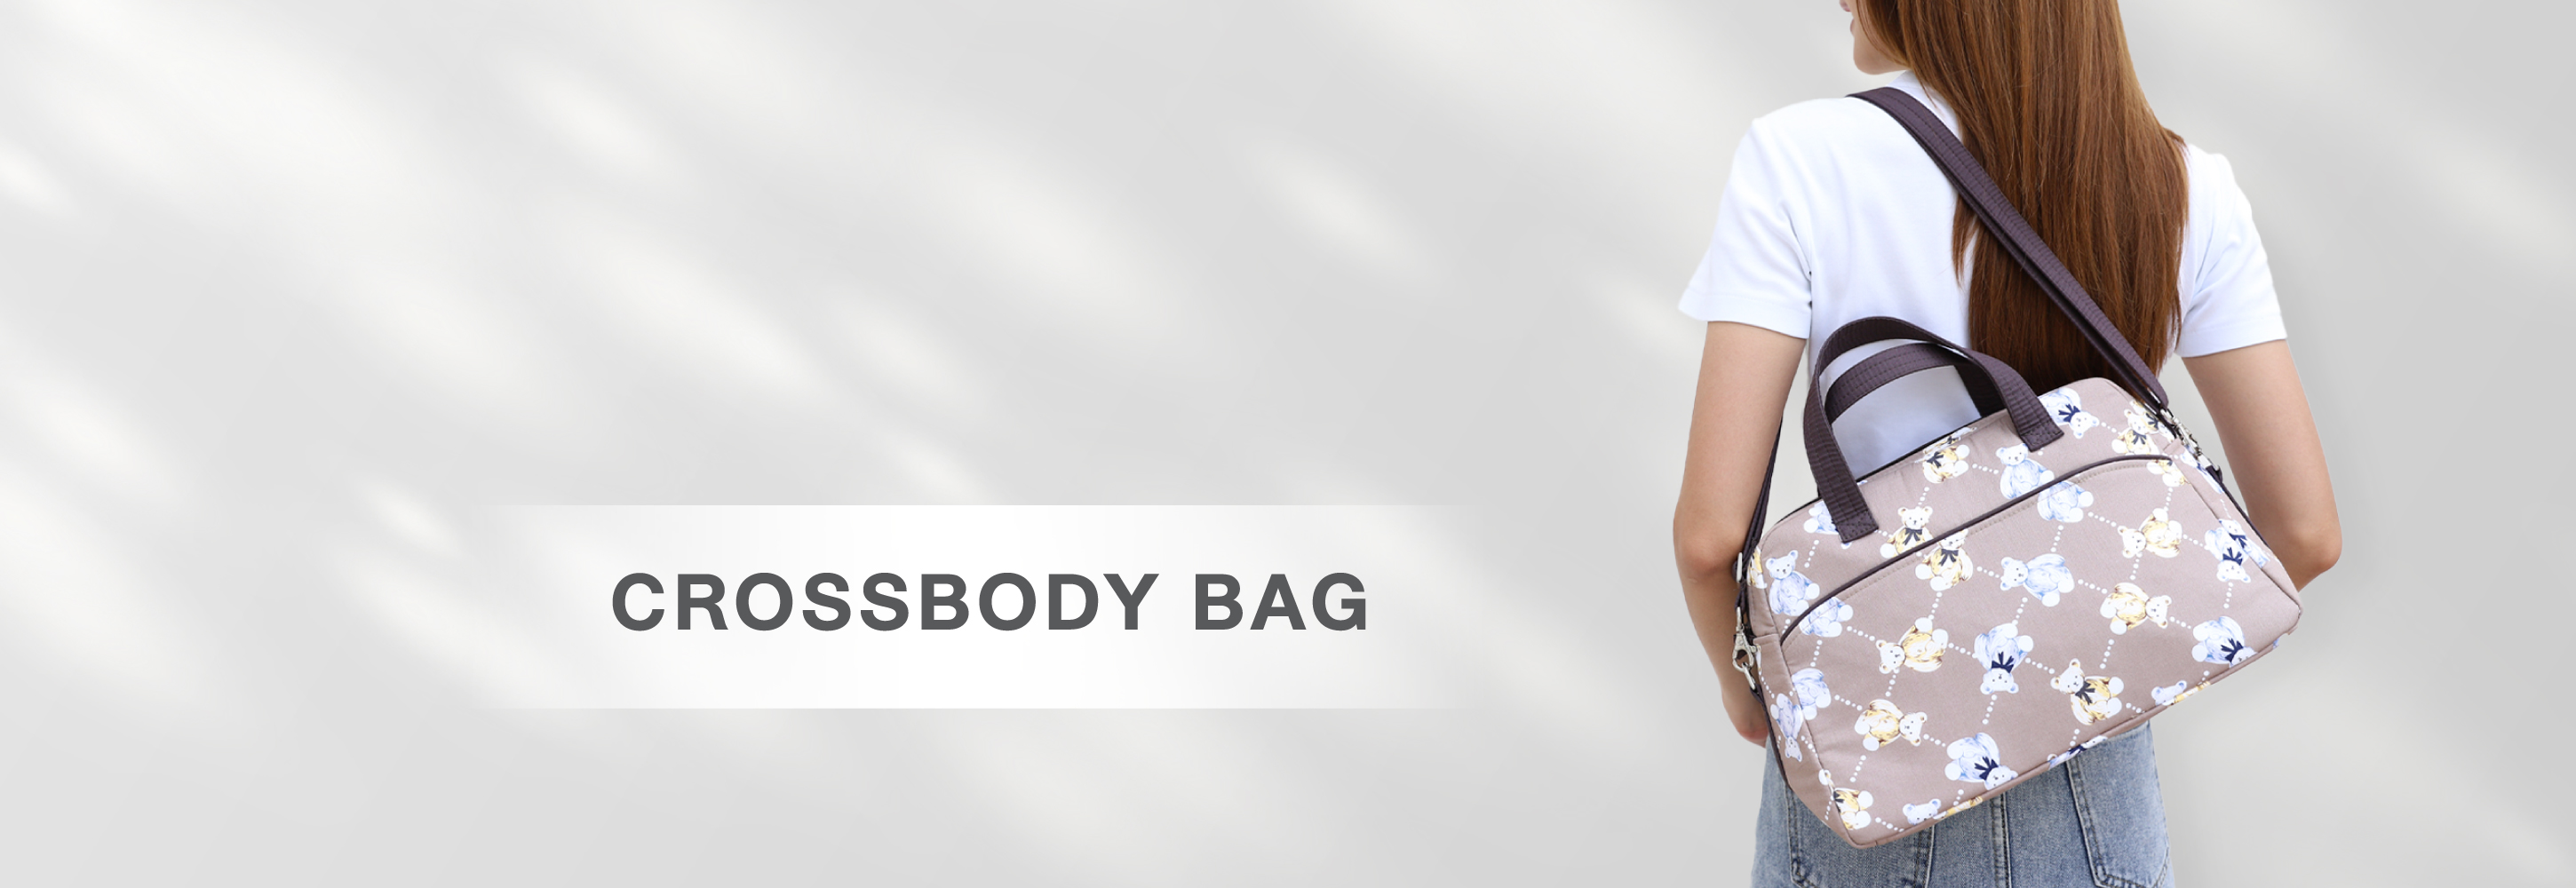 NaRaYa Crossbody Bag กระเป๋าสะพายข้าง NBS-1007